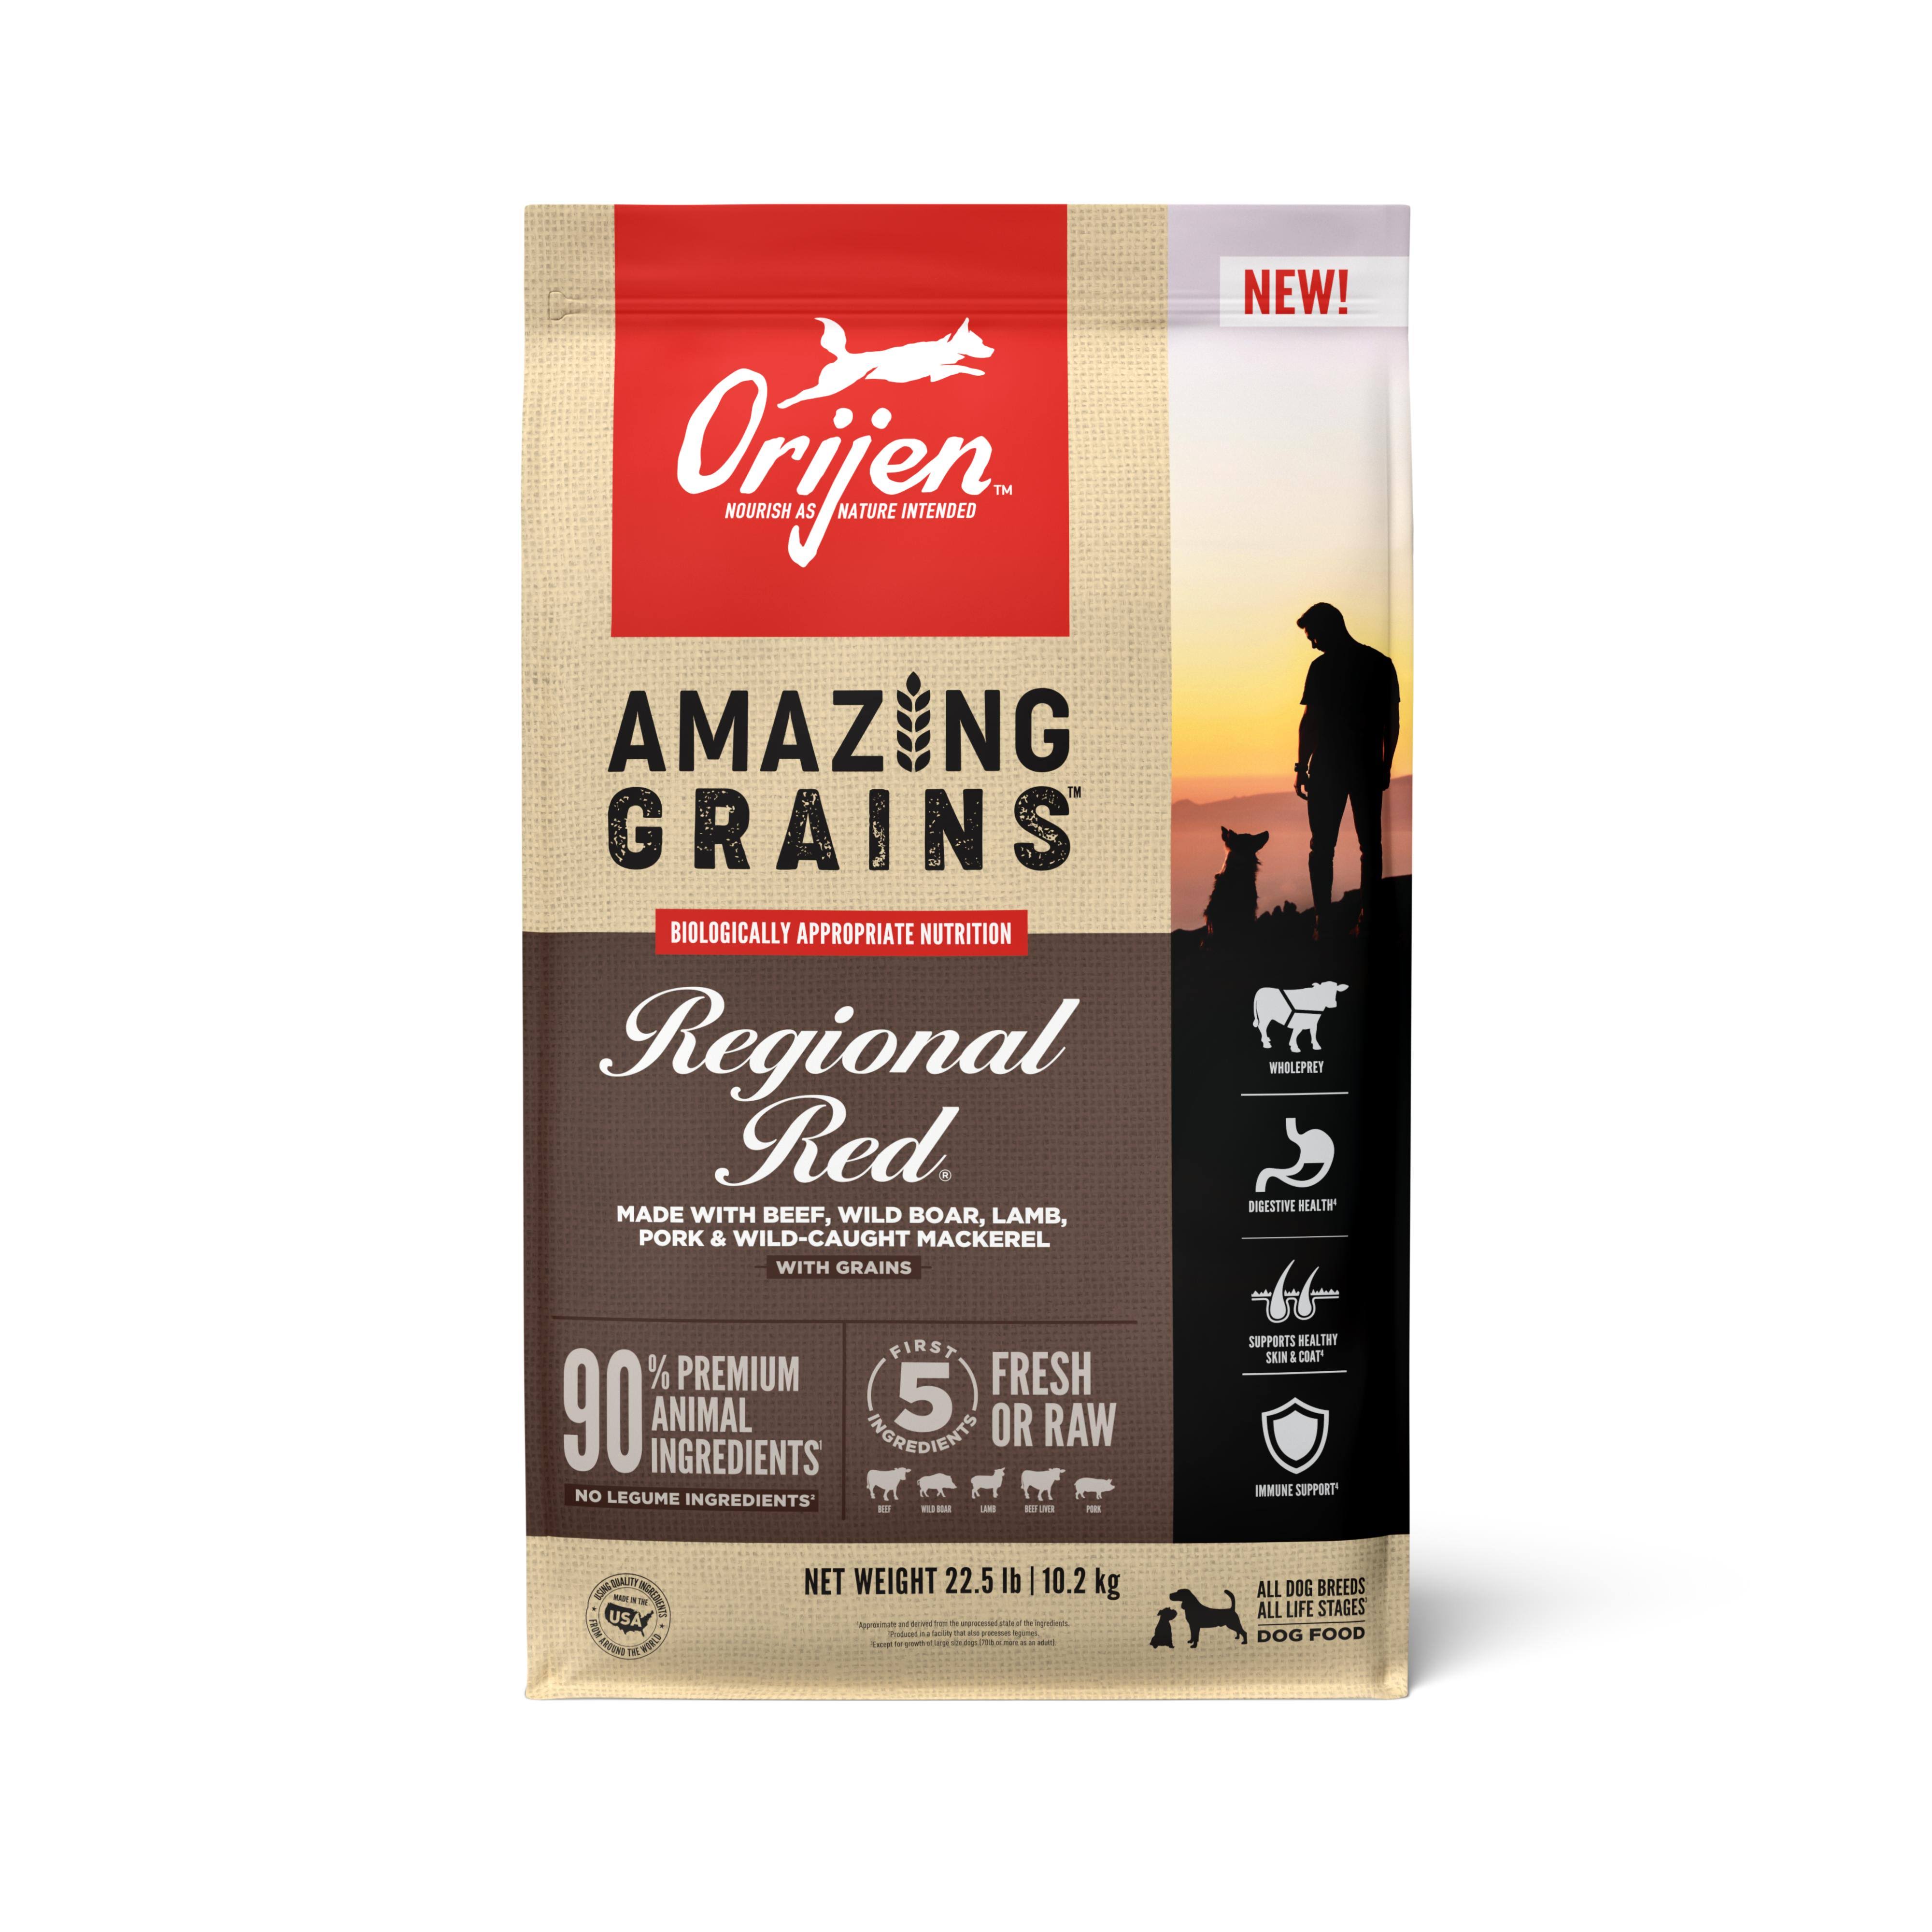 Orijen Amazing Grains Regional Red Dry Dog Food - 22.5 lb